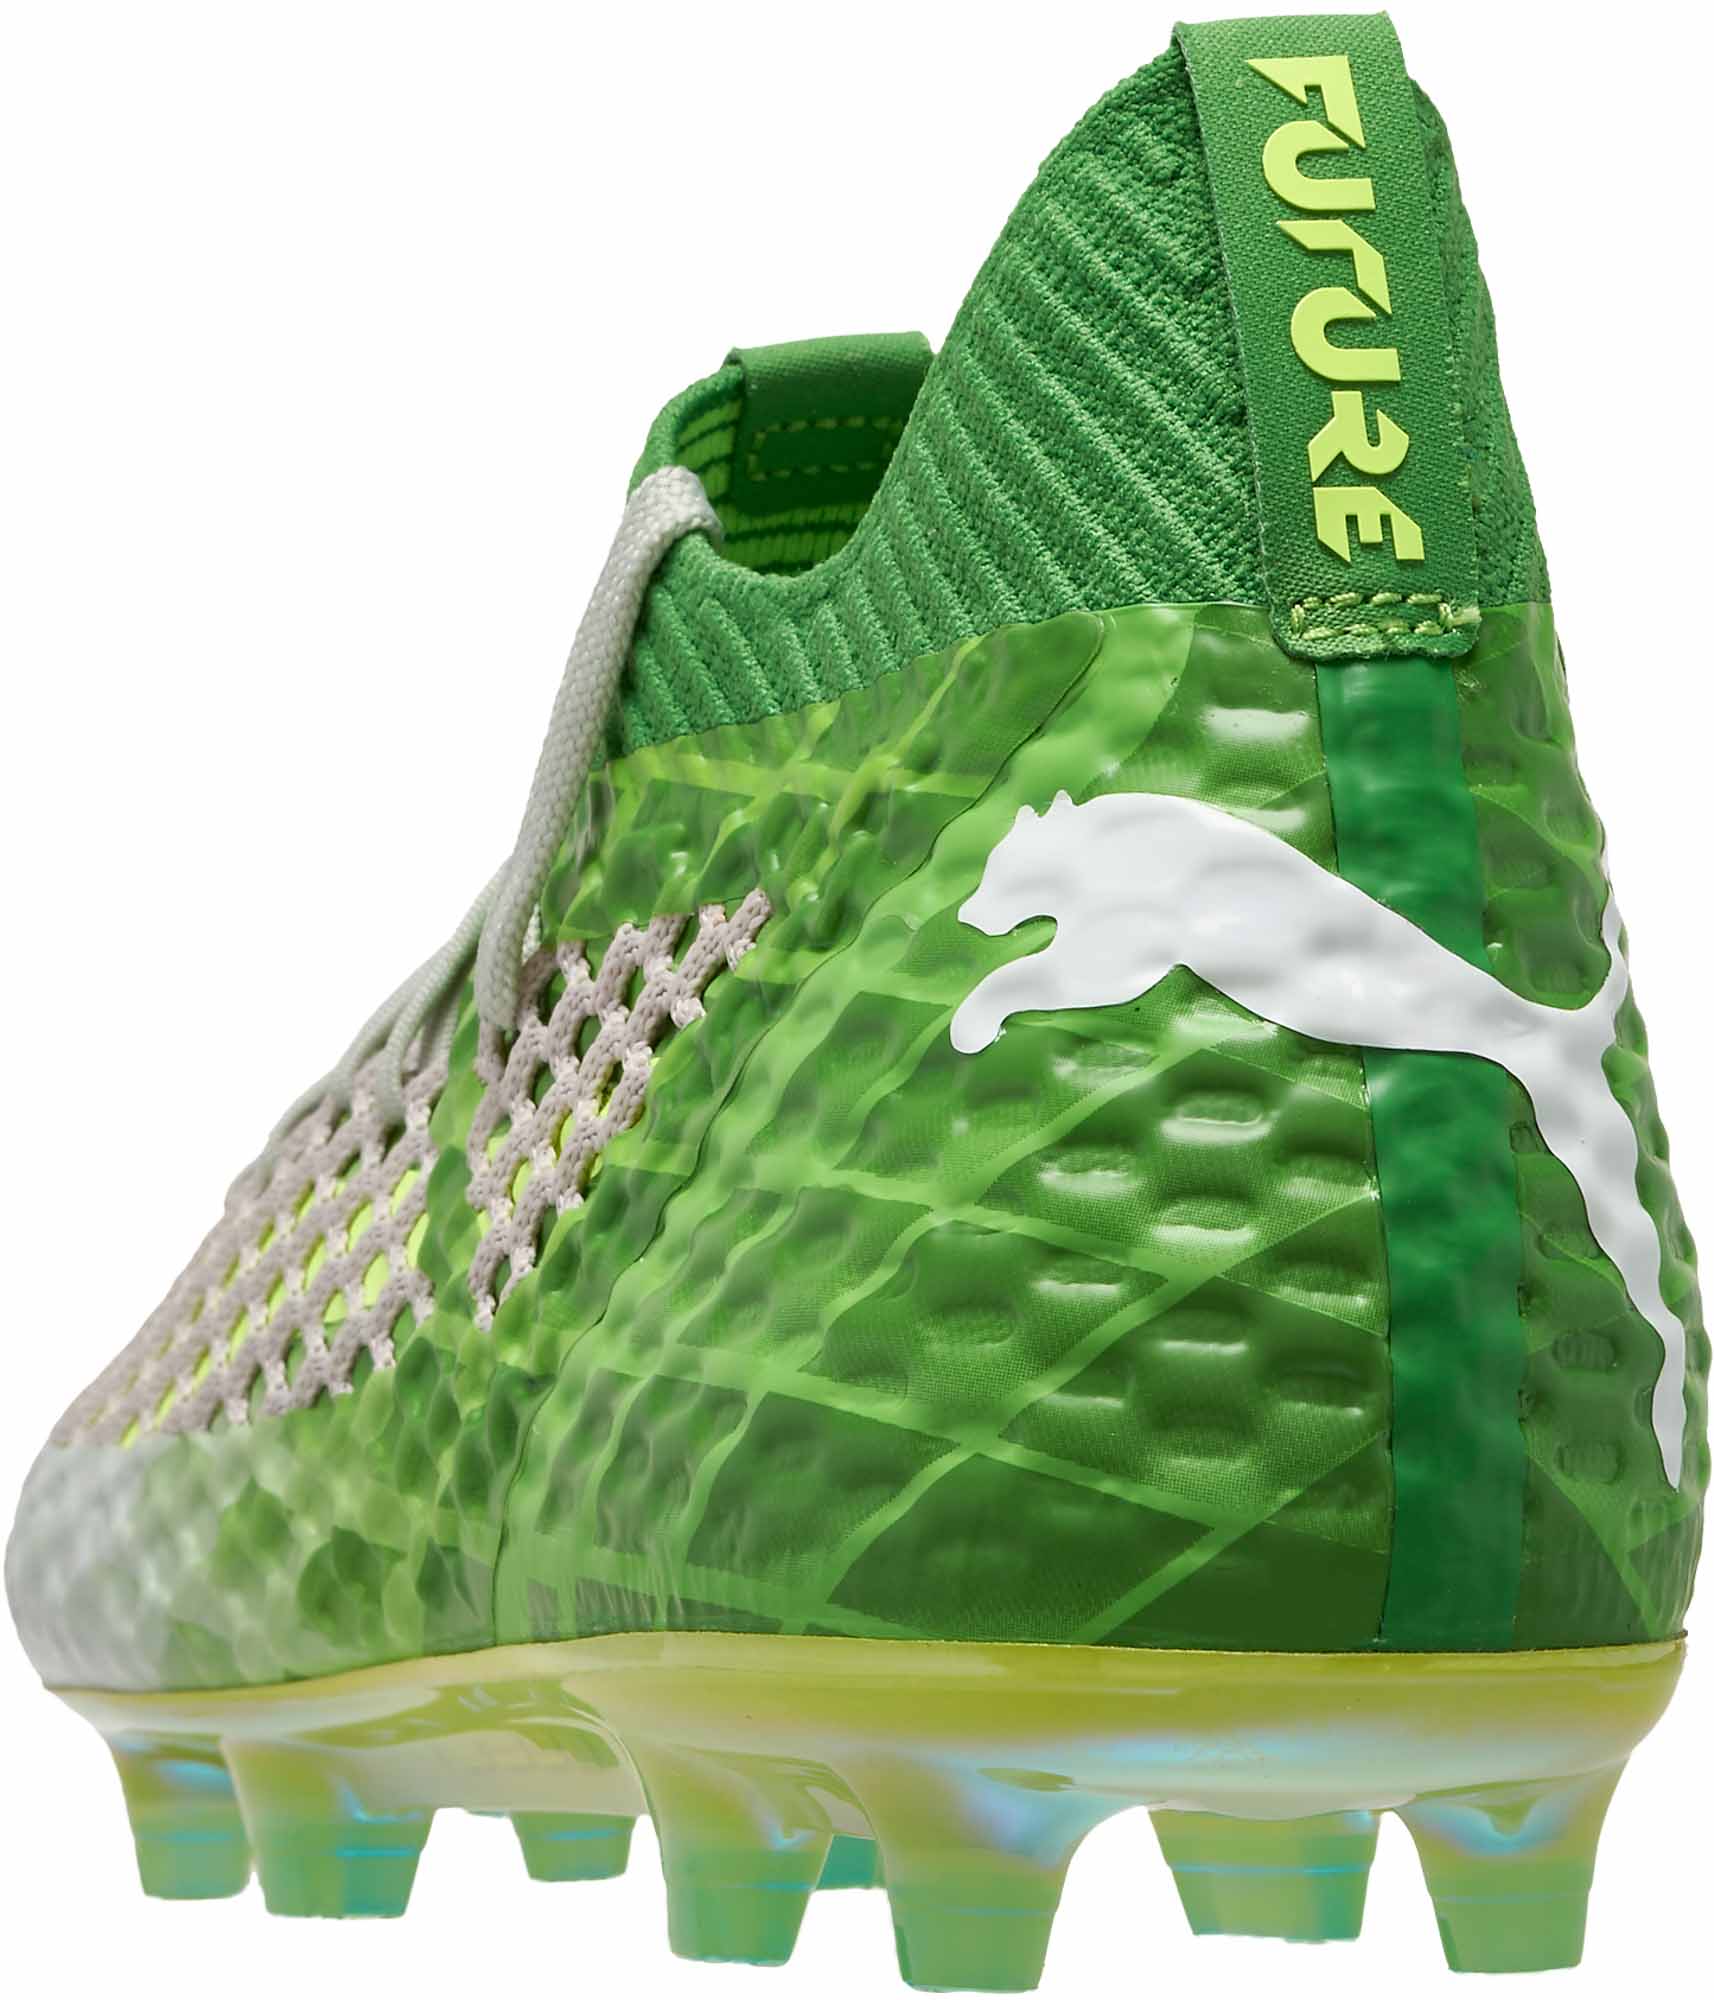 Puma Future 18 1 Netfit Fg On Off Green Gecko White Soccer